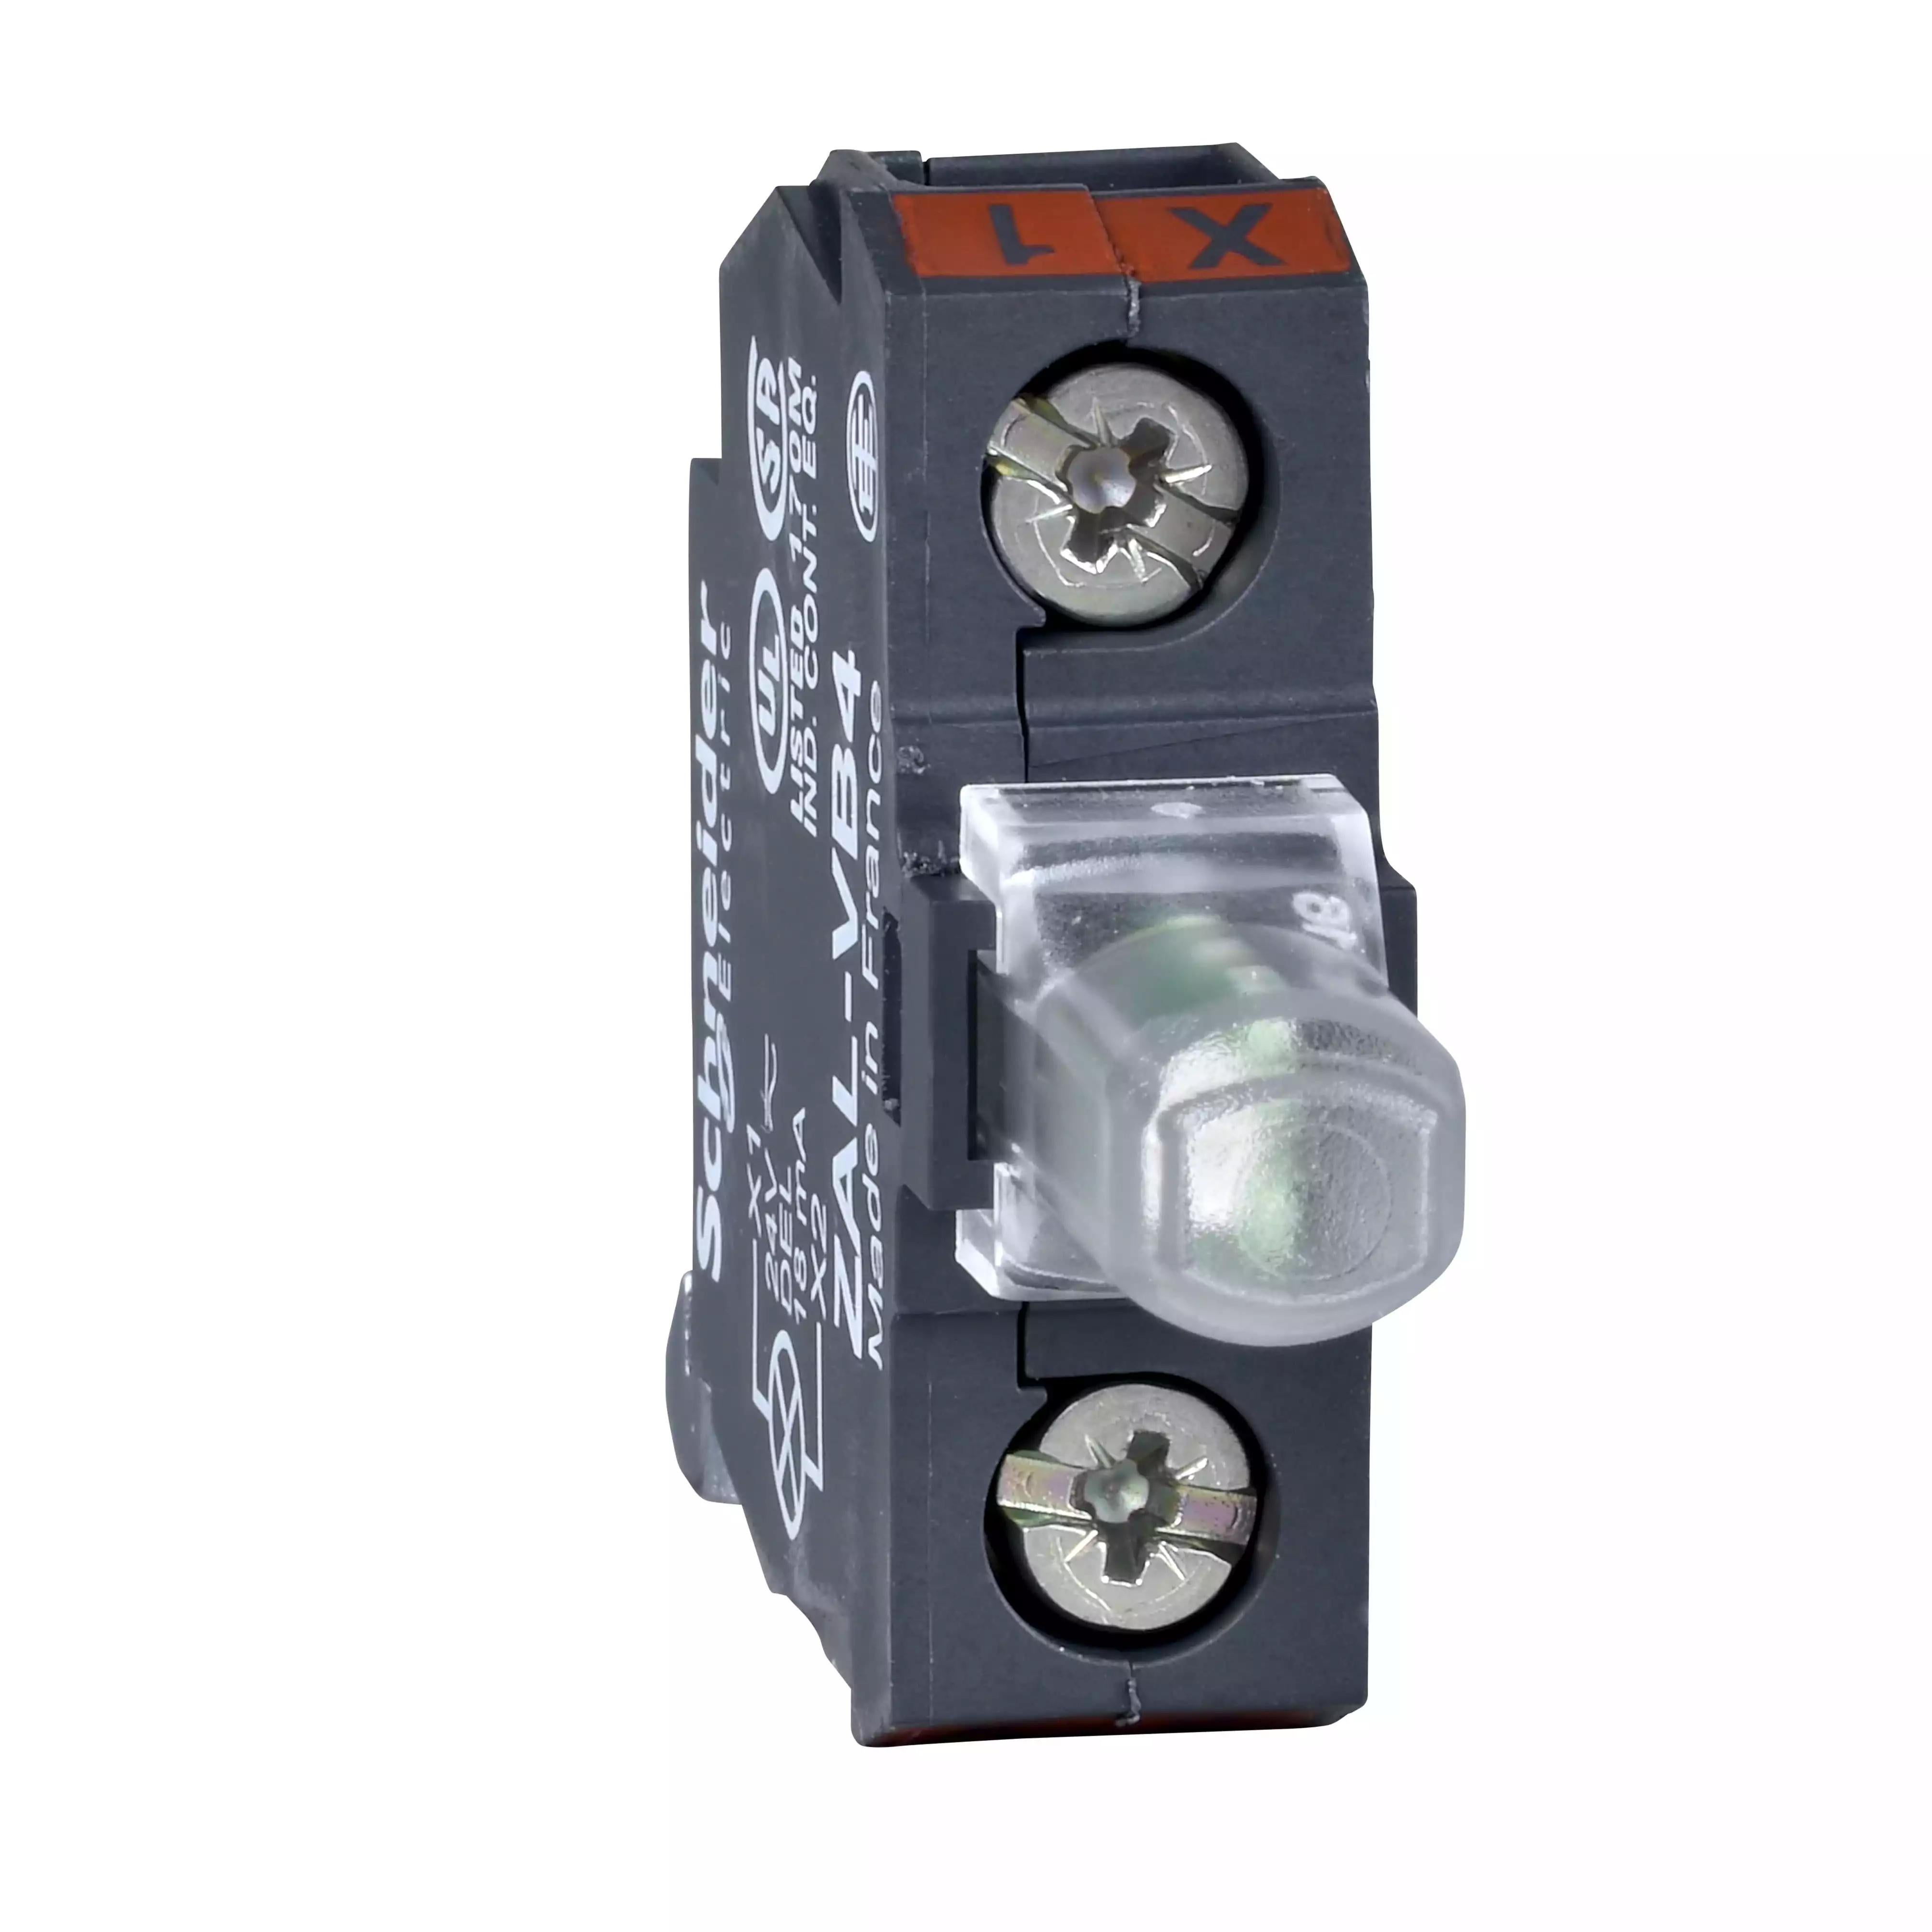 Light block for head 22mm, Harmony XALD, XALK, blue, integral LED, rear mounting, screw clamp terminal, 24V AC DC